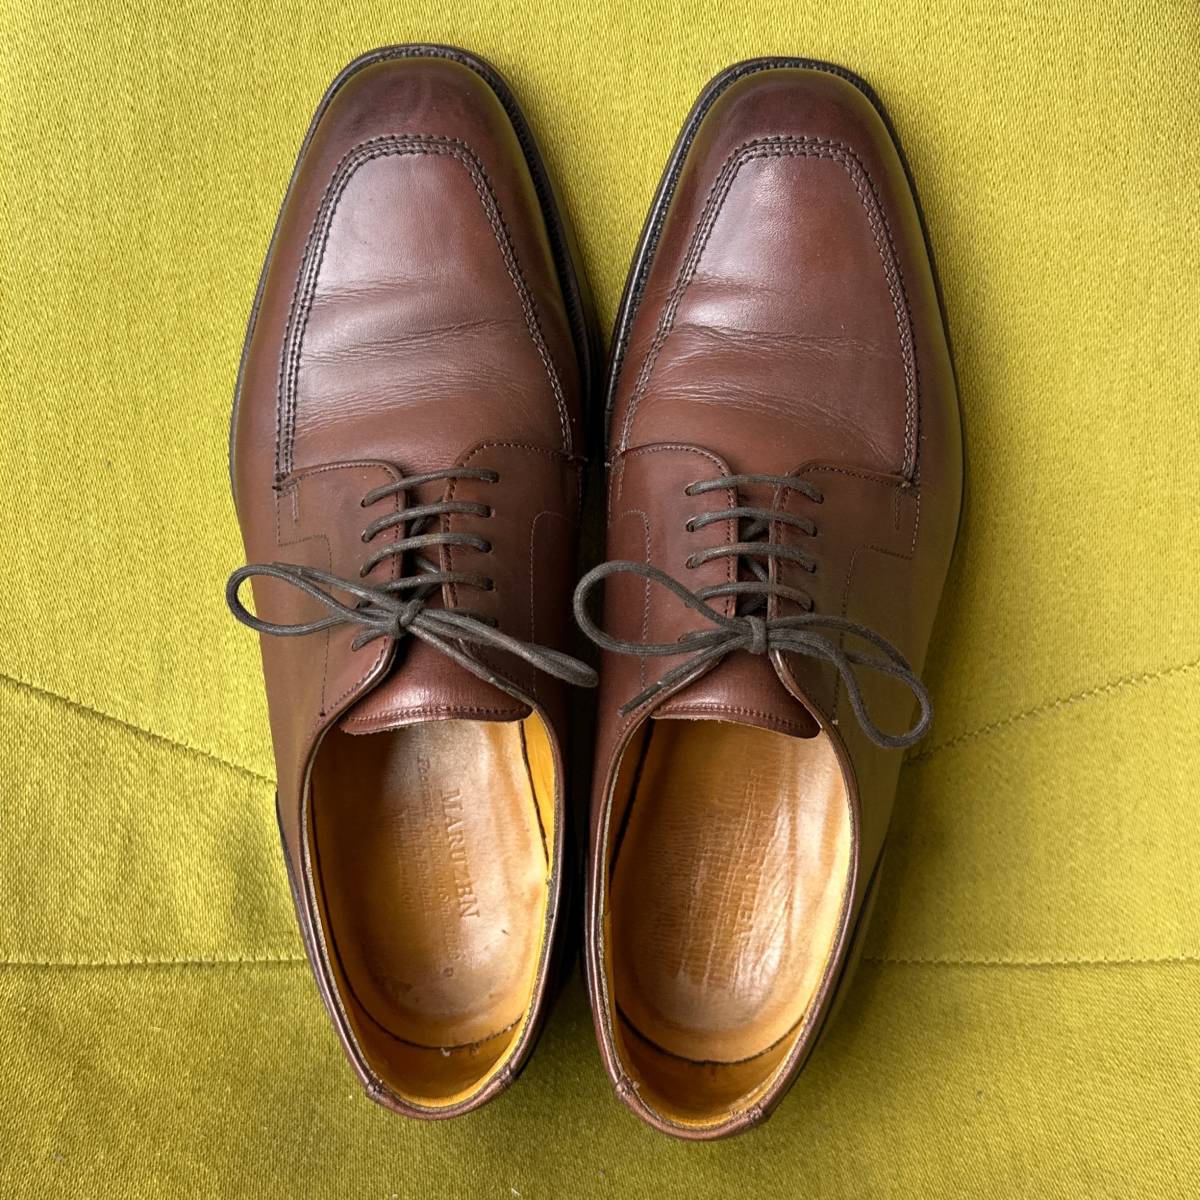 GRENSON Glenn son производства MARUZEN специальный заказ U chip кожа обувь 6.5F Британия производства бизнес 25.0 соответствует 